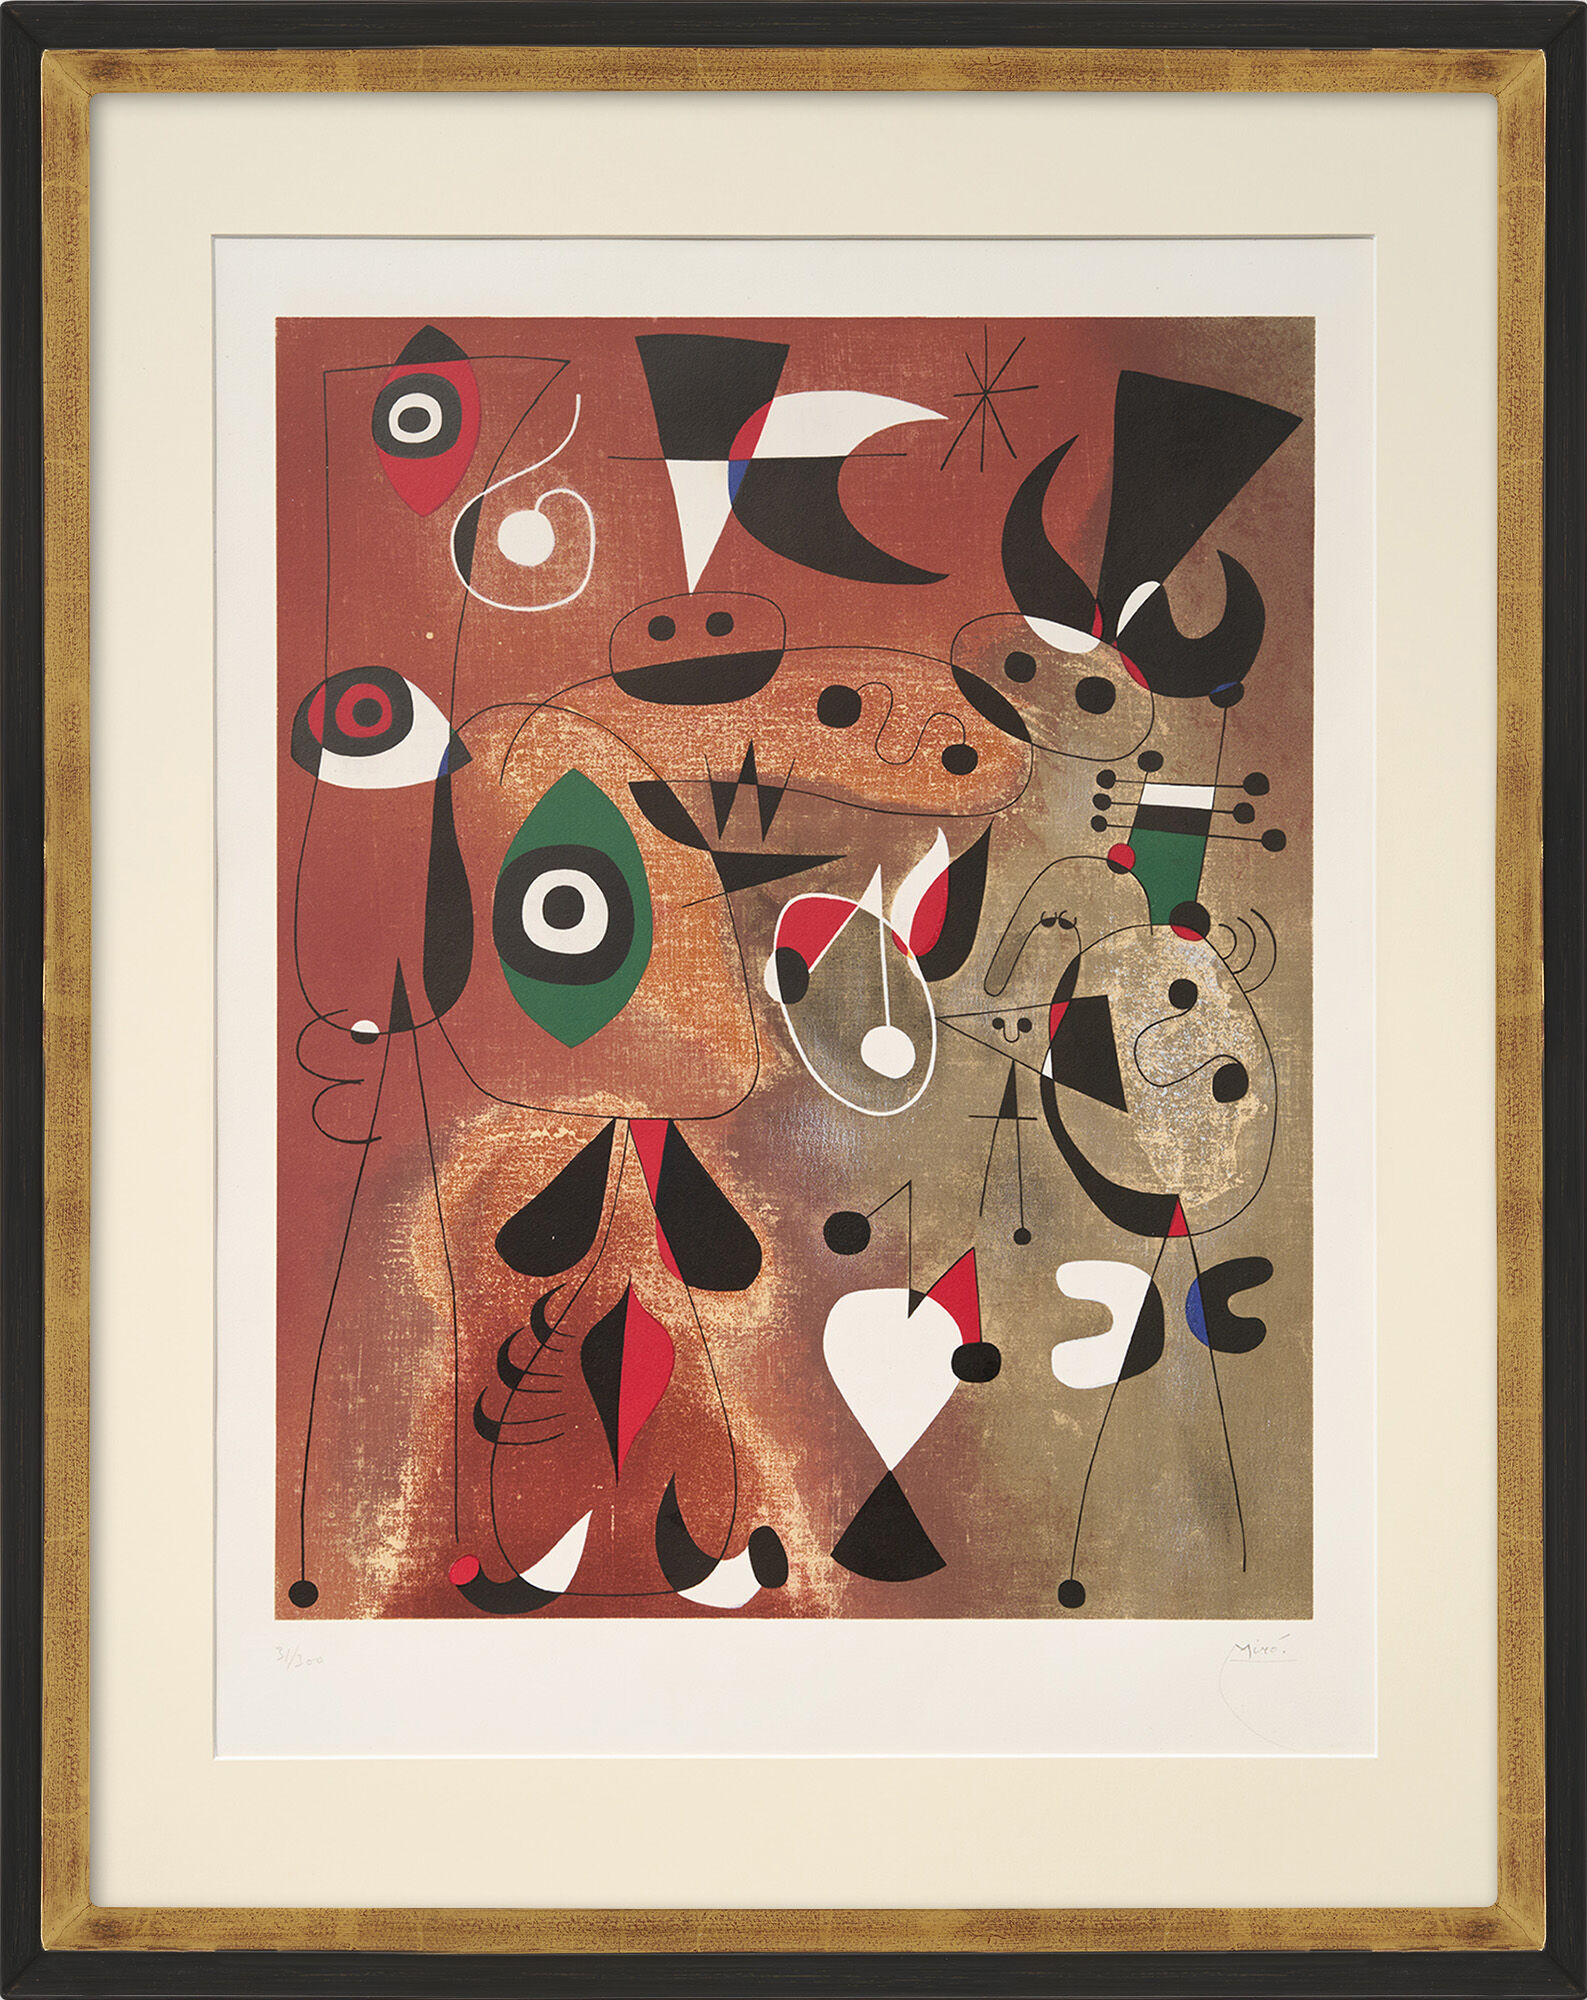 Beeld "Femme, oiseau, etoile" (1960) von Joan Miró